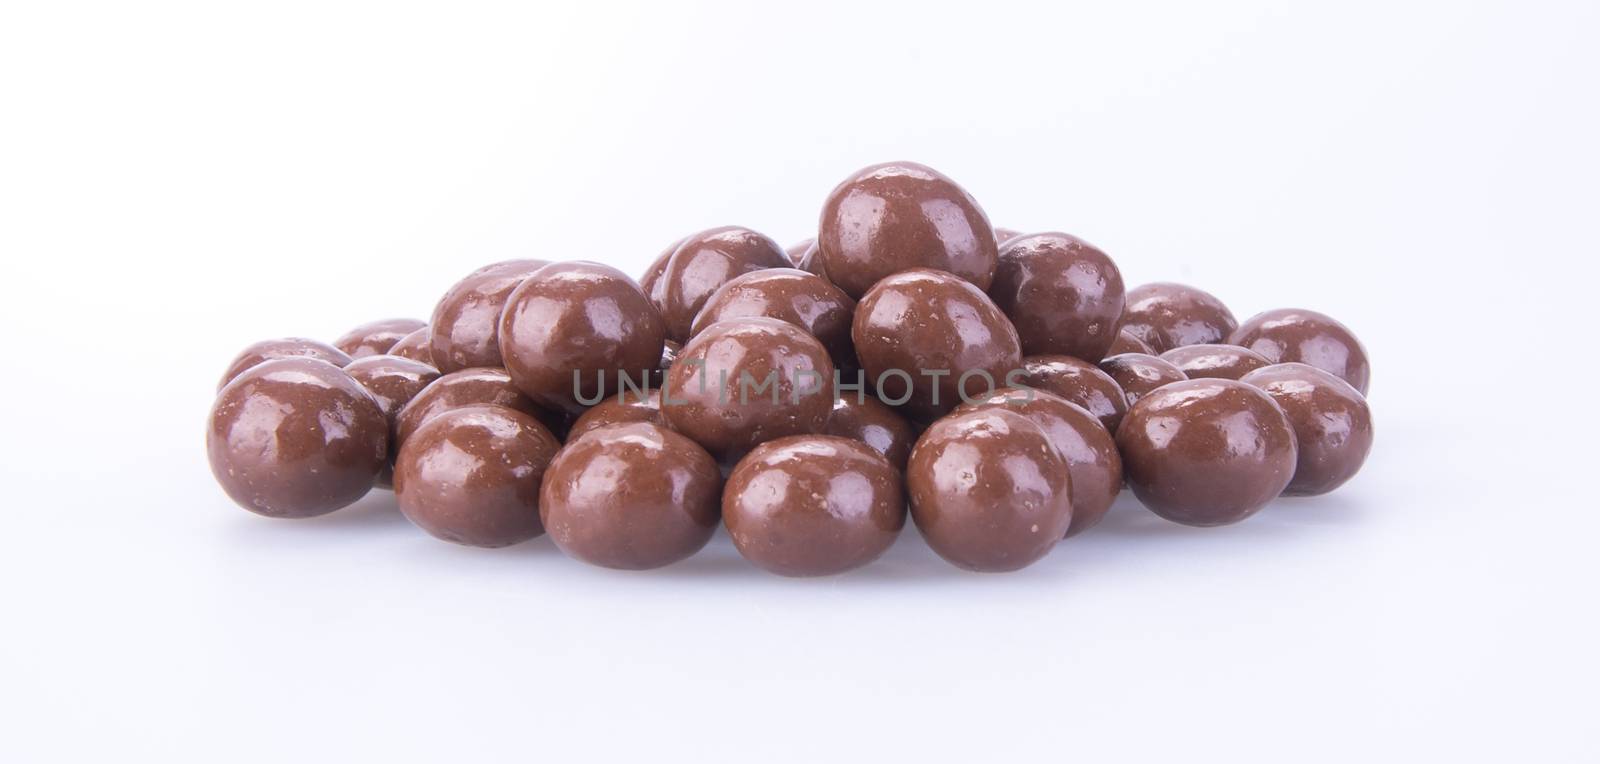 chocolate balls. chocolate balls on a background by heinteh